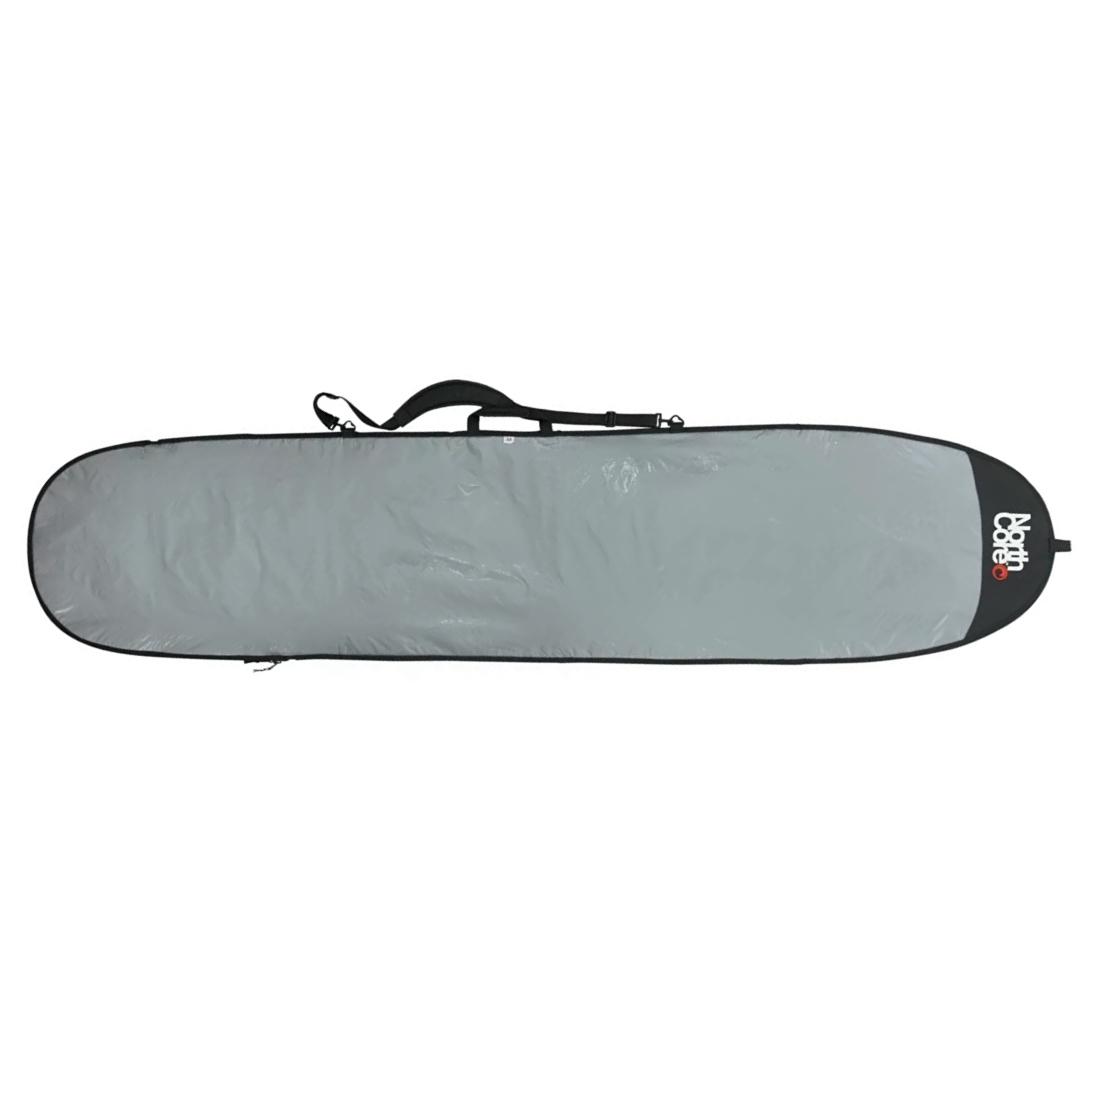 Northcore 8&#39;0 New Addiction Mini-Mal Surfboard Bag - Silver - Longboard Surfboard Bag/Cover by Northcore 8ft 0